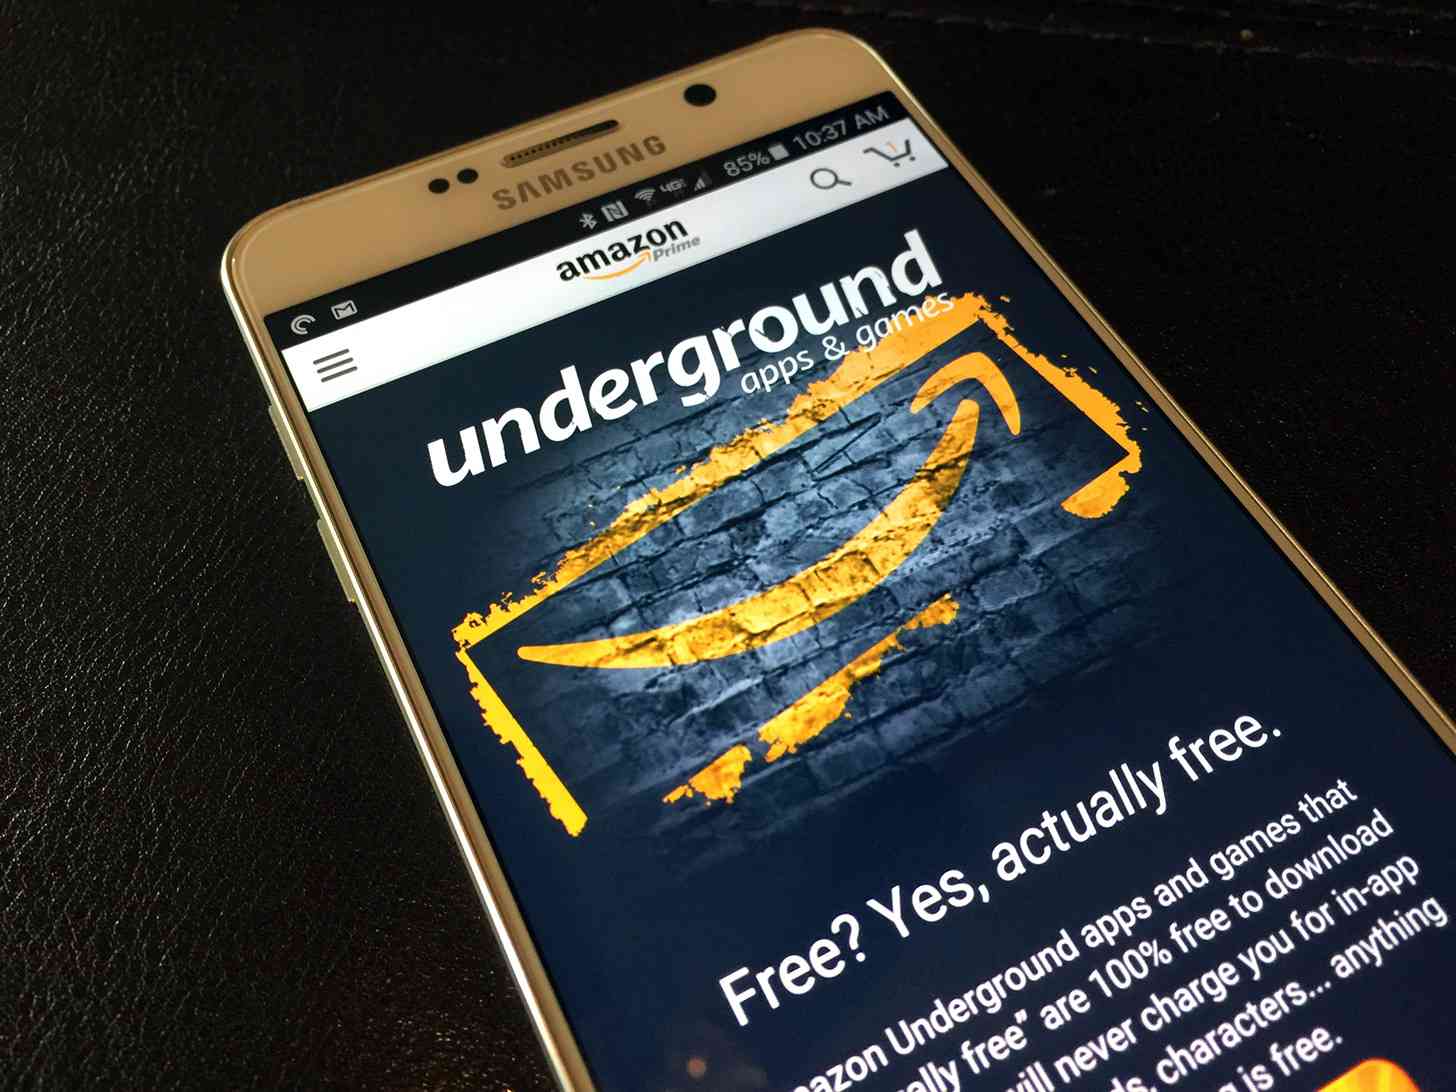 Amazon Underground Actually Free Android apps program